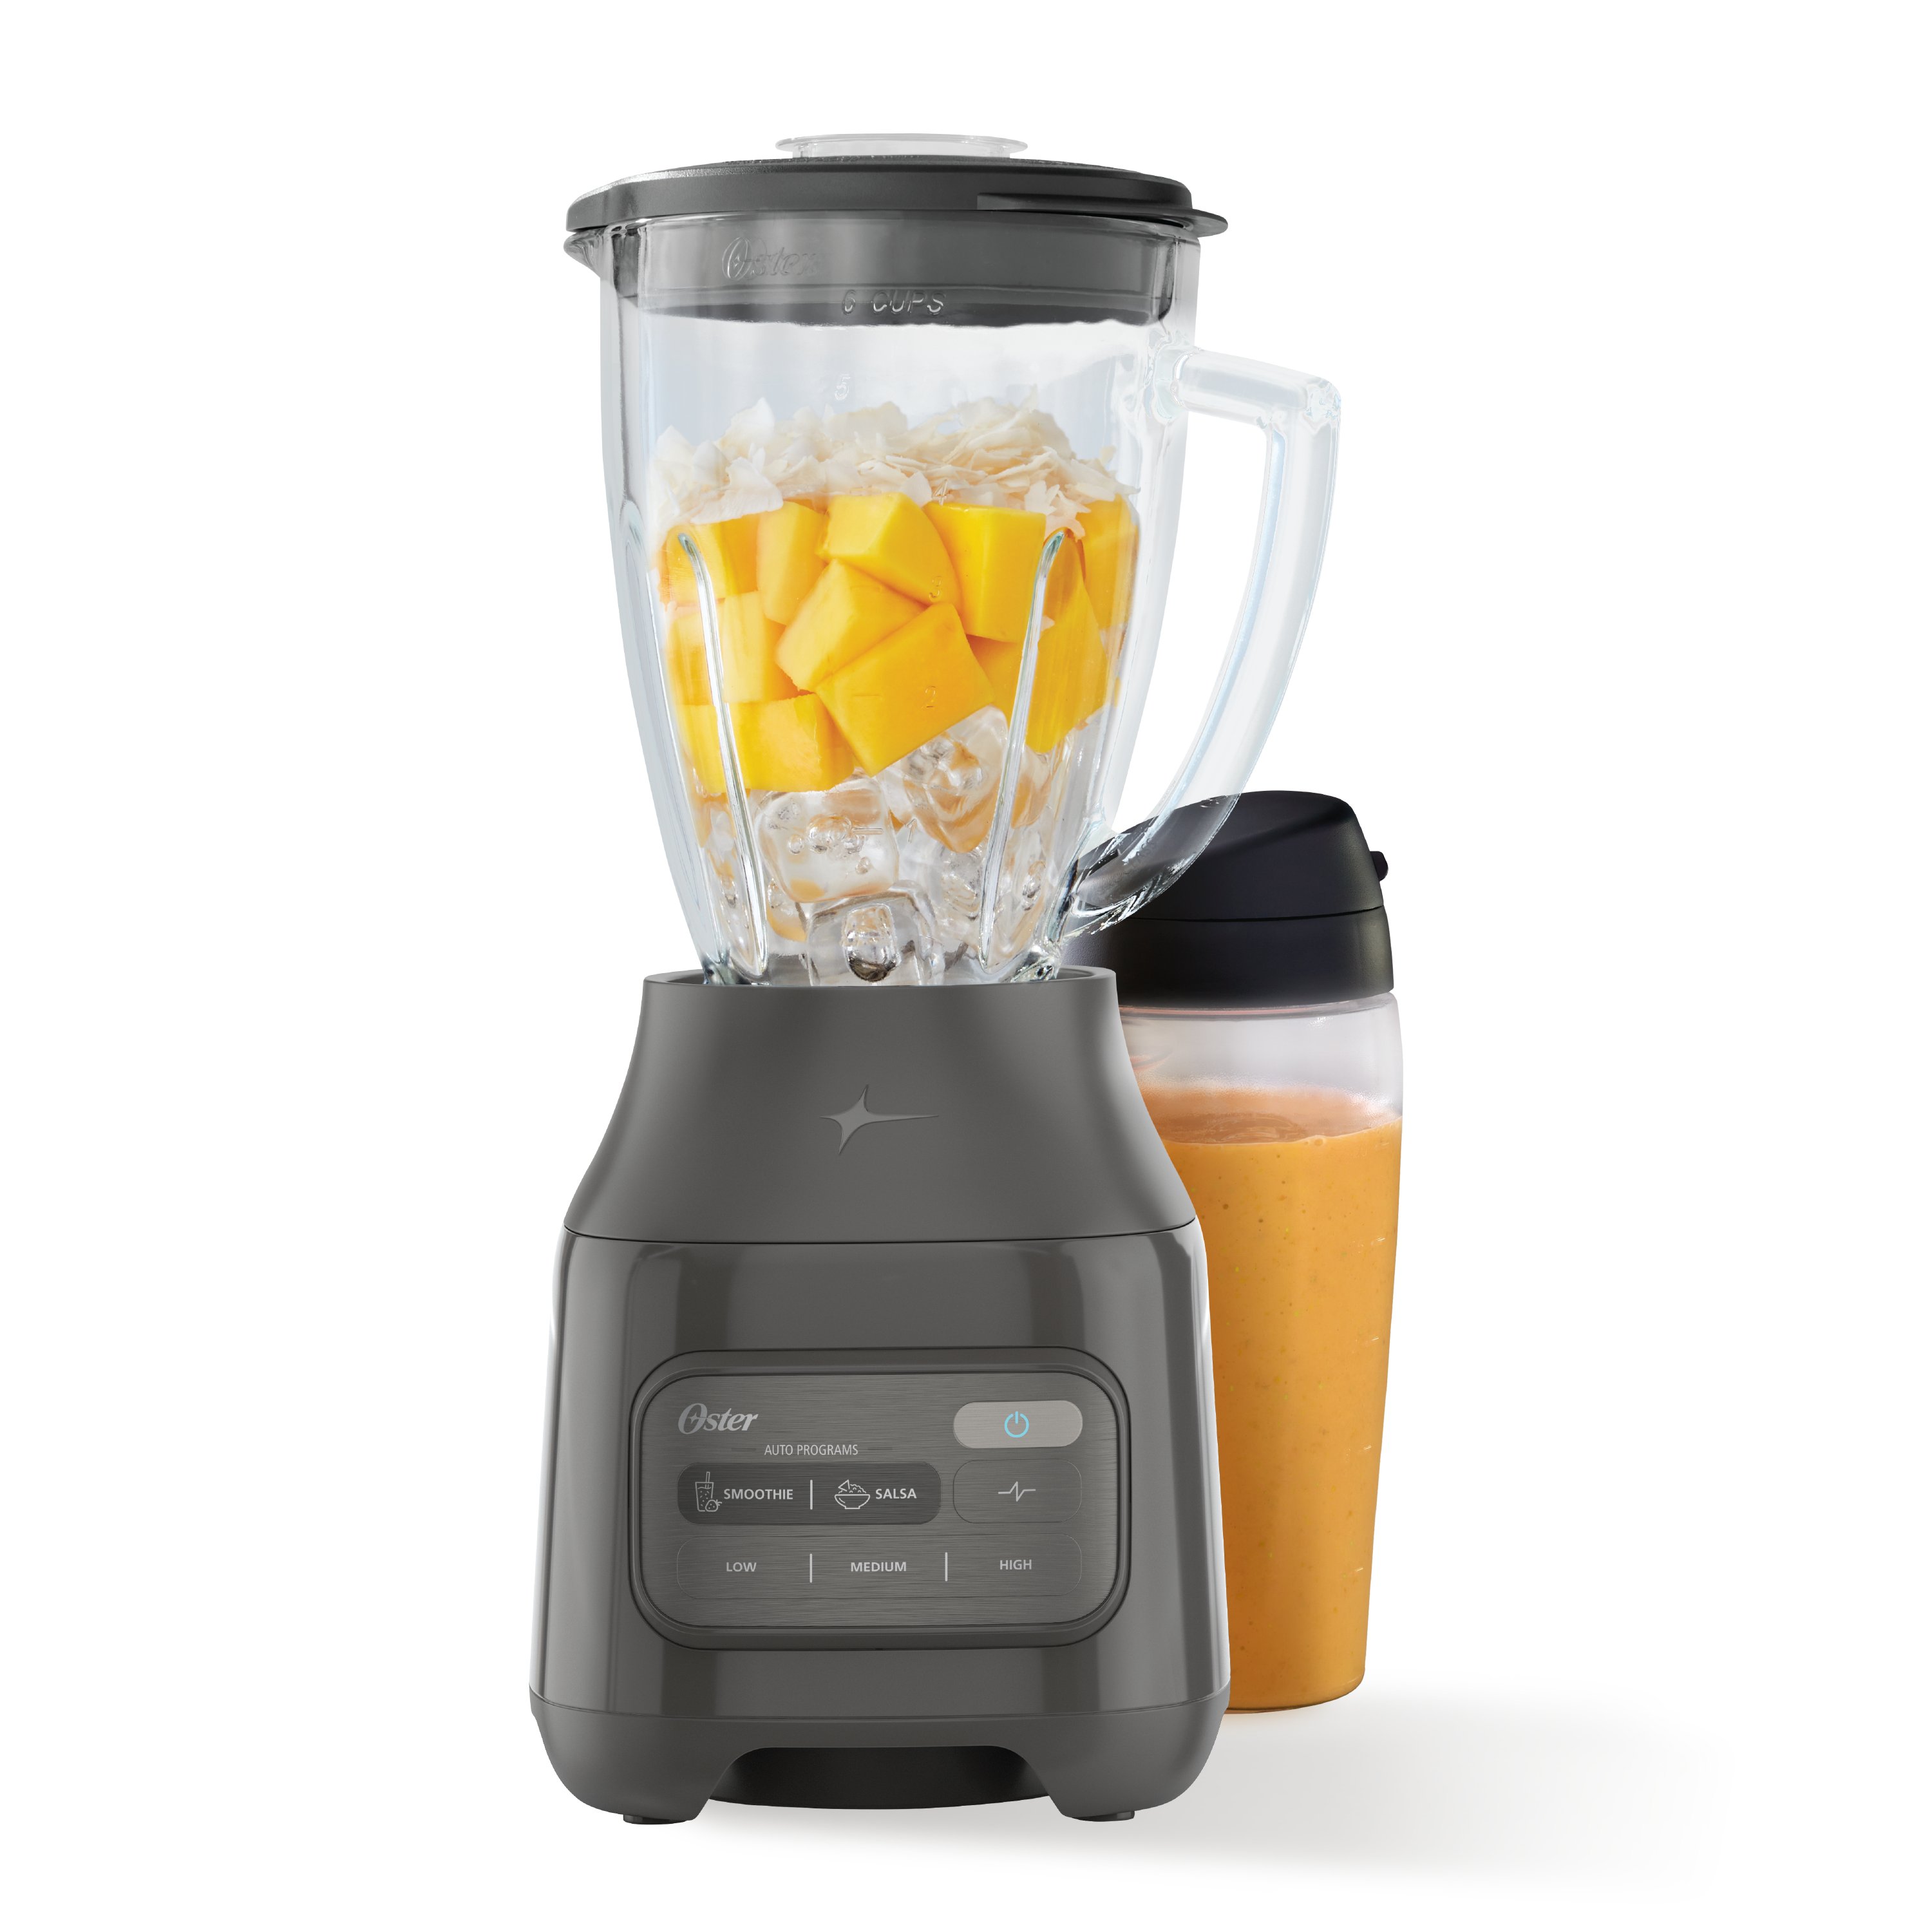 Portable Smoothie Blender Cup – Innovation